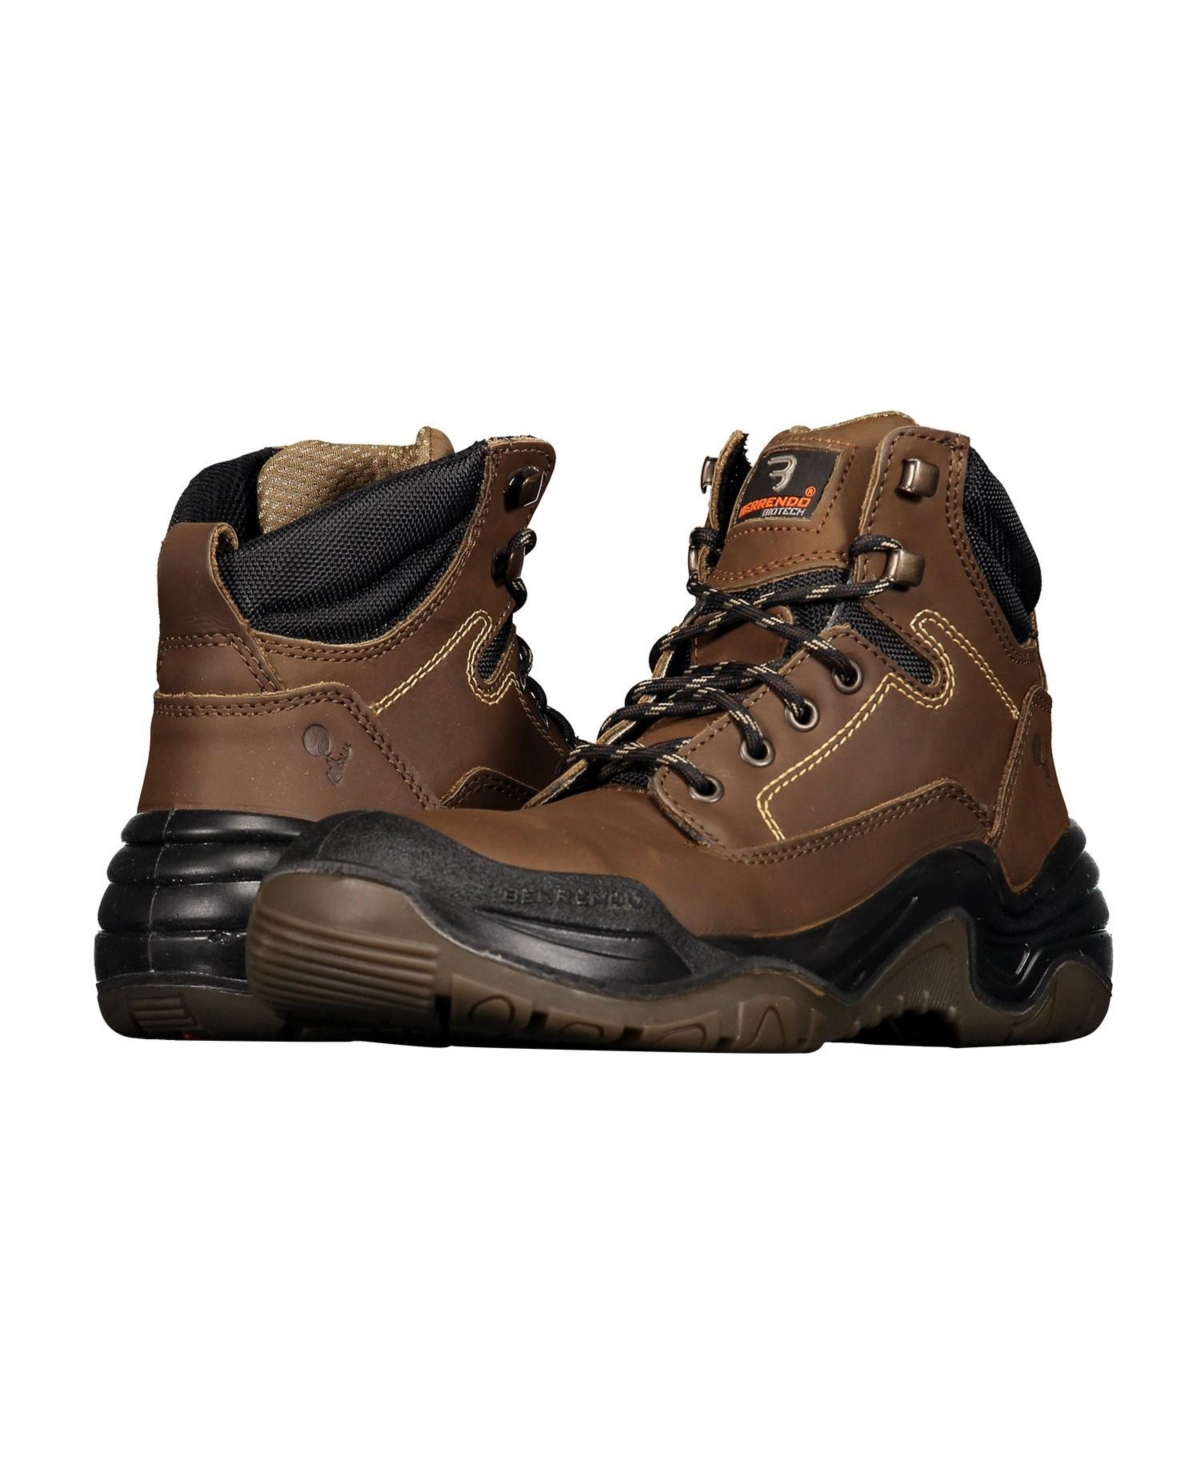 Men's Steel Toe Work Boots 6" - Oil and Slip Resistant - Eh Rated - Sierra